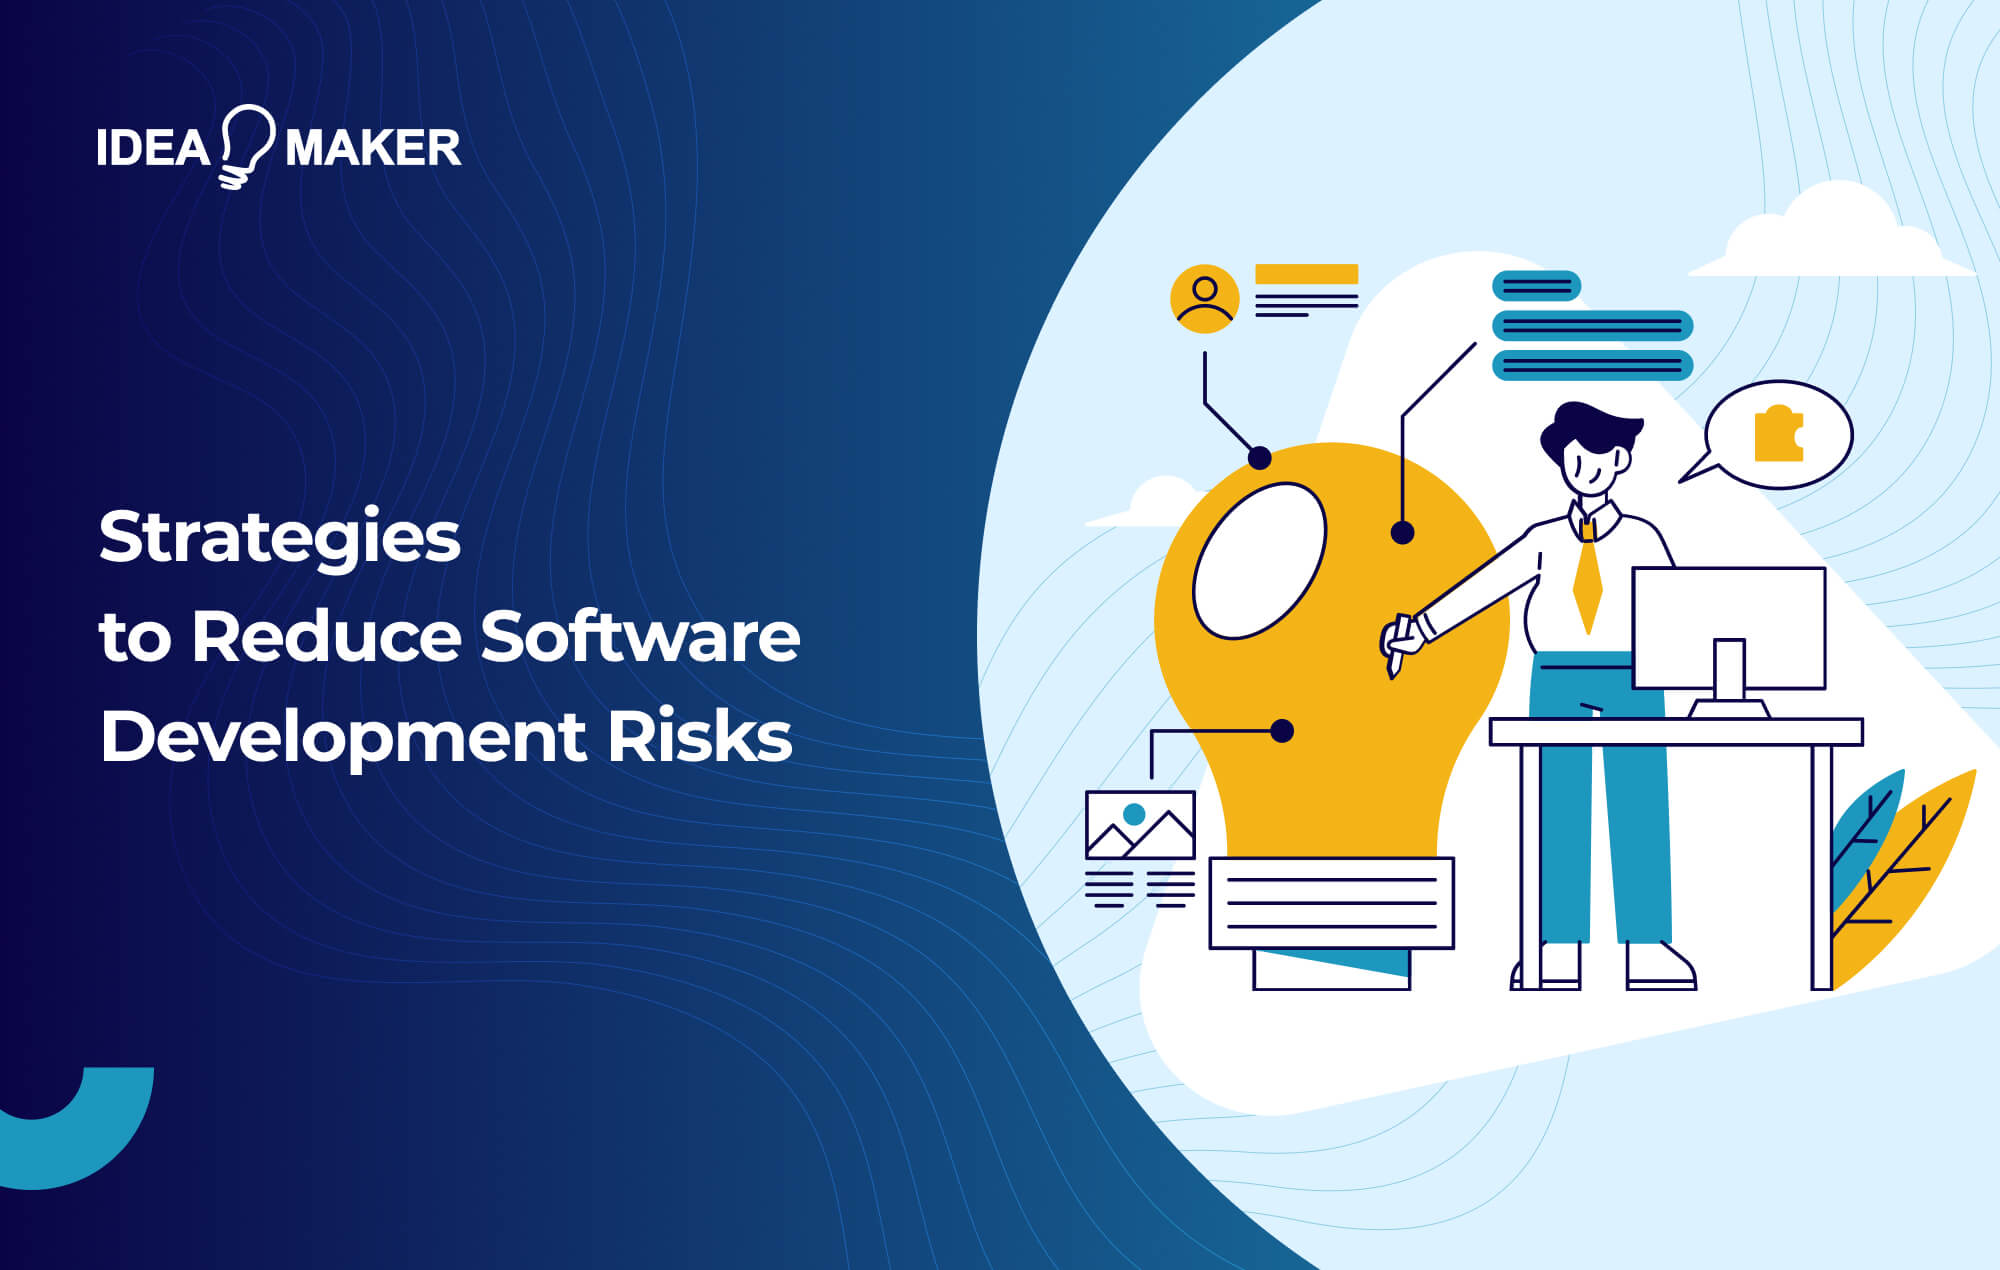 Ideamaker - Strategies to Reduce Software Development Risks